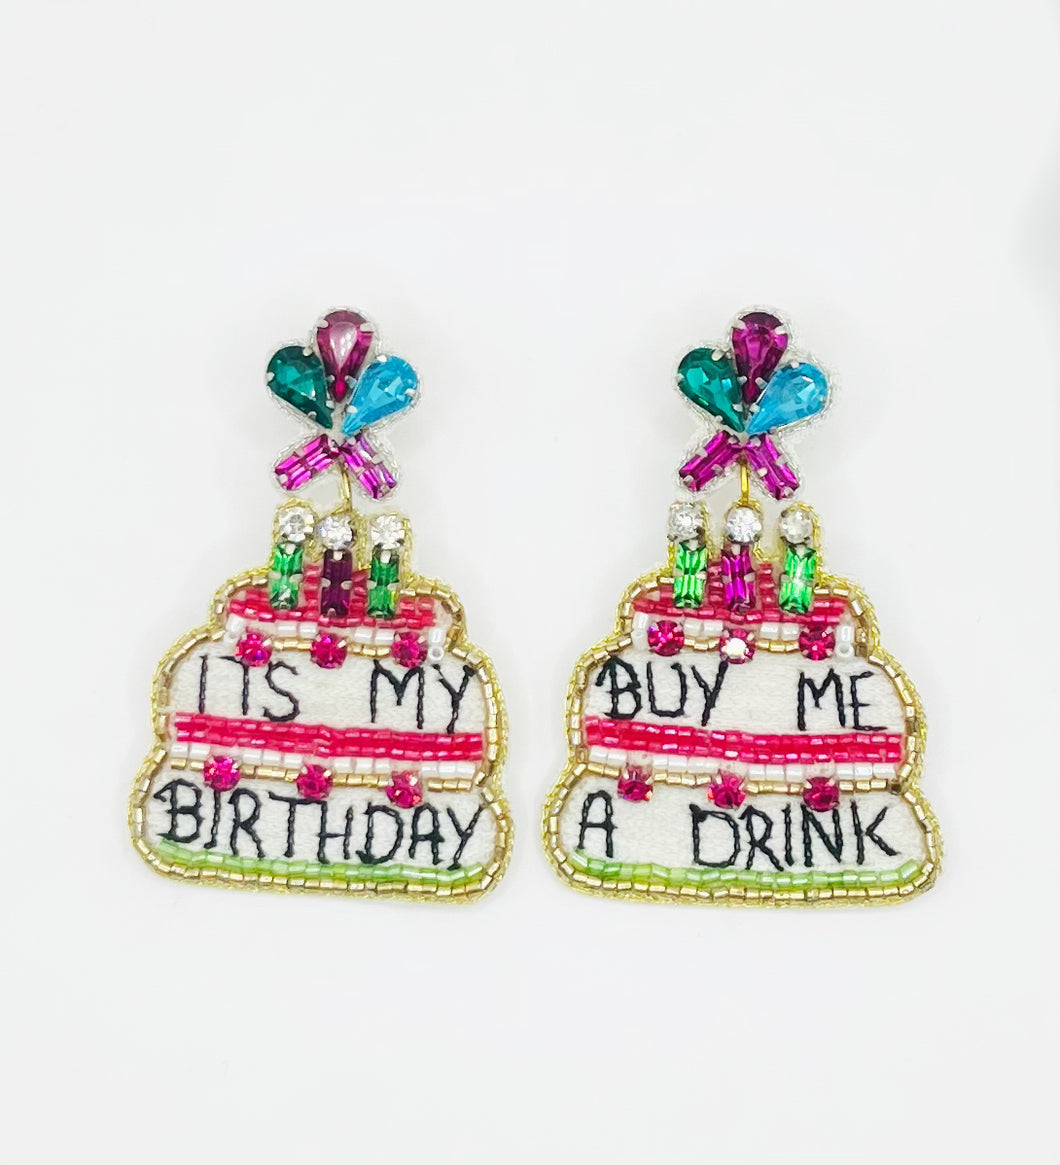 Birthday Cake Buy Me A Drink Beaded Statement Earrings